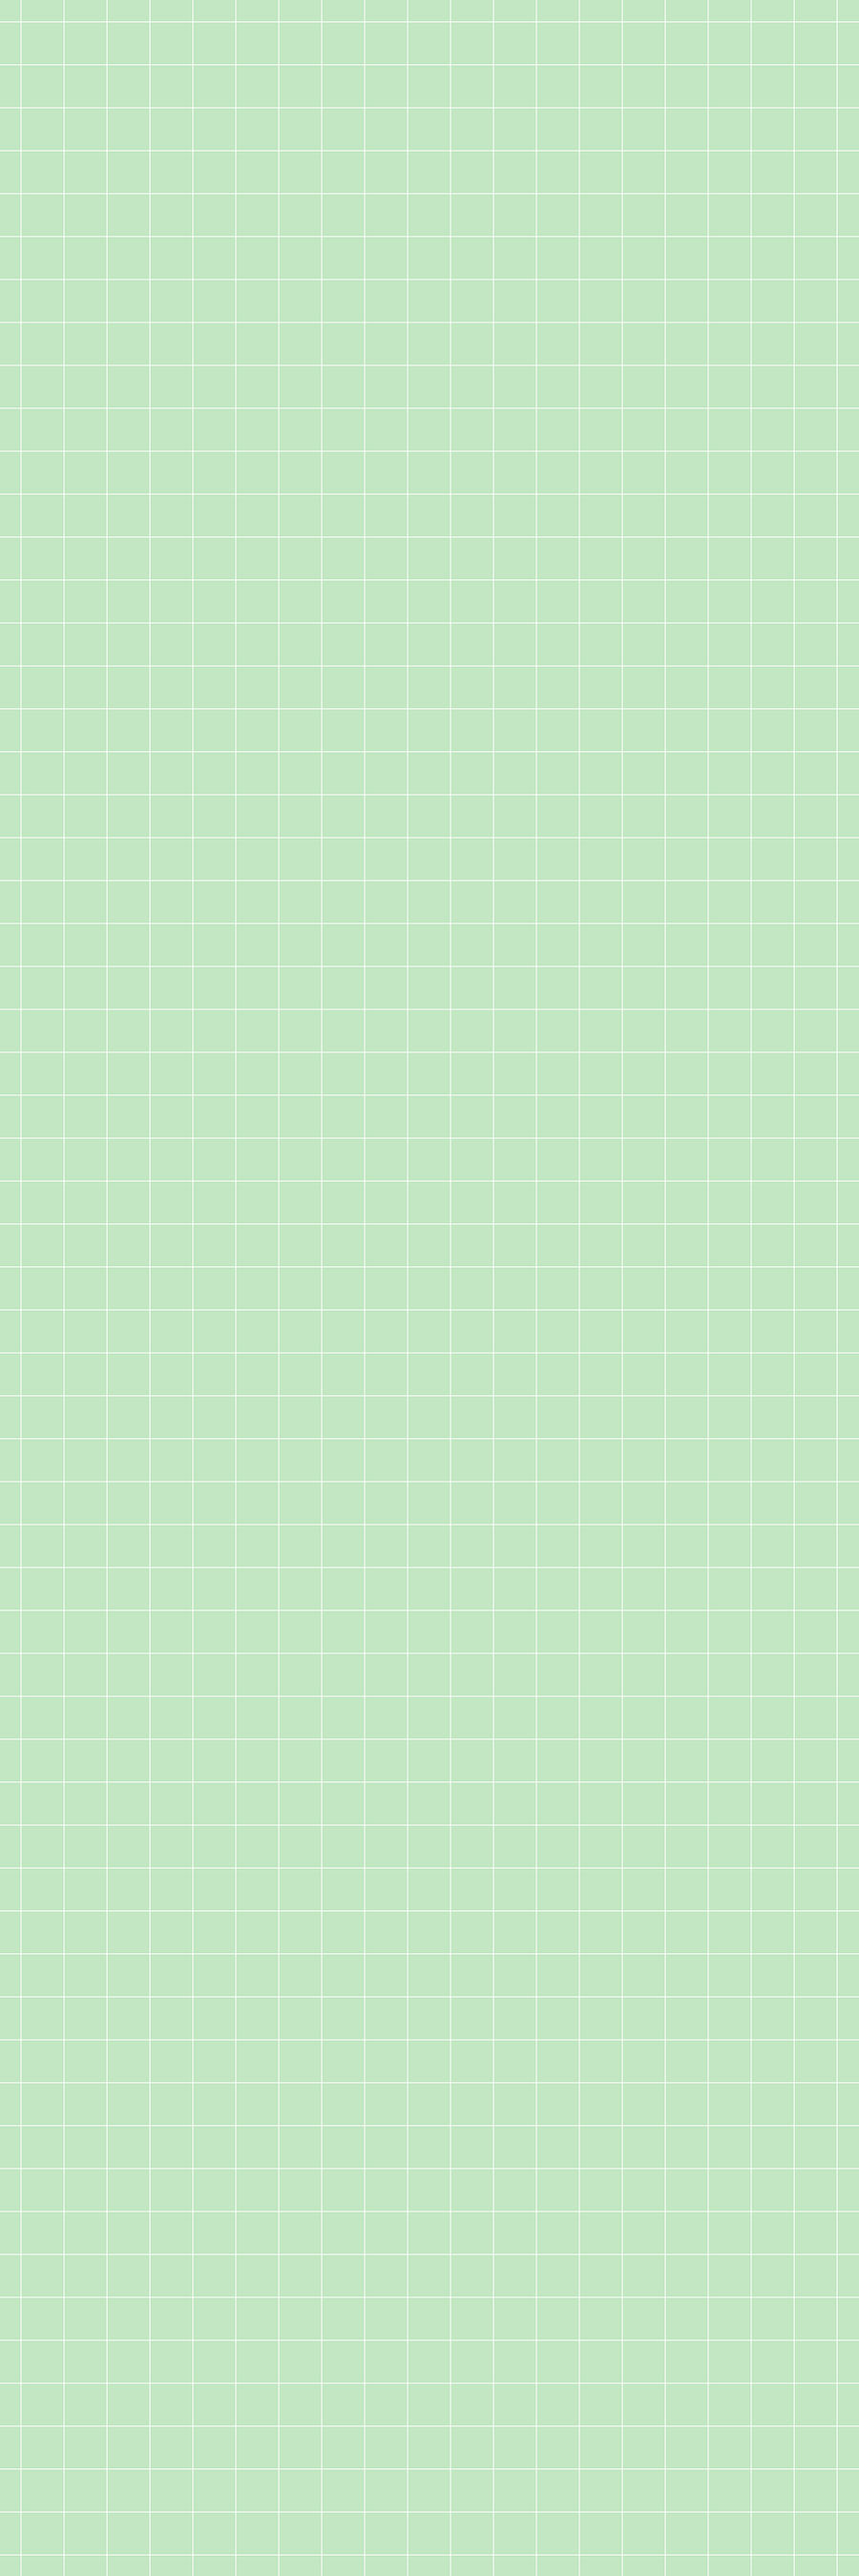 Pastel Green Grid Custom Background (F2U) by Virus-Xenon on DeviantArt